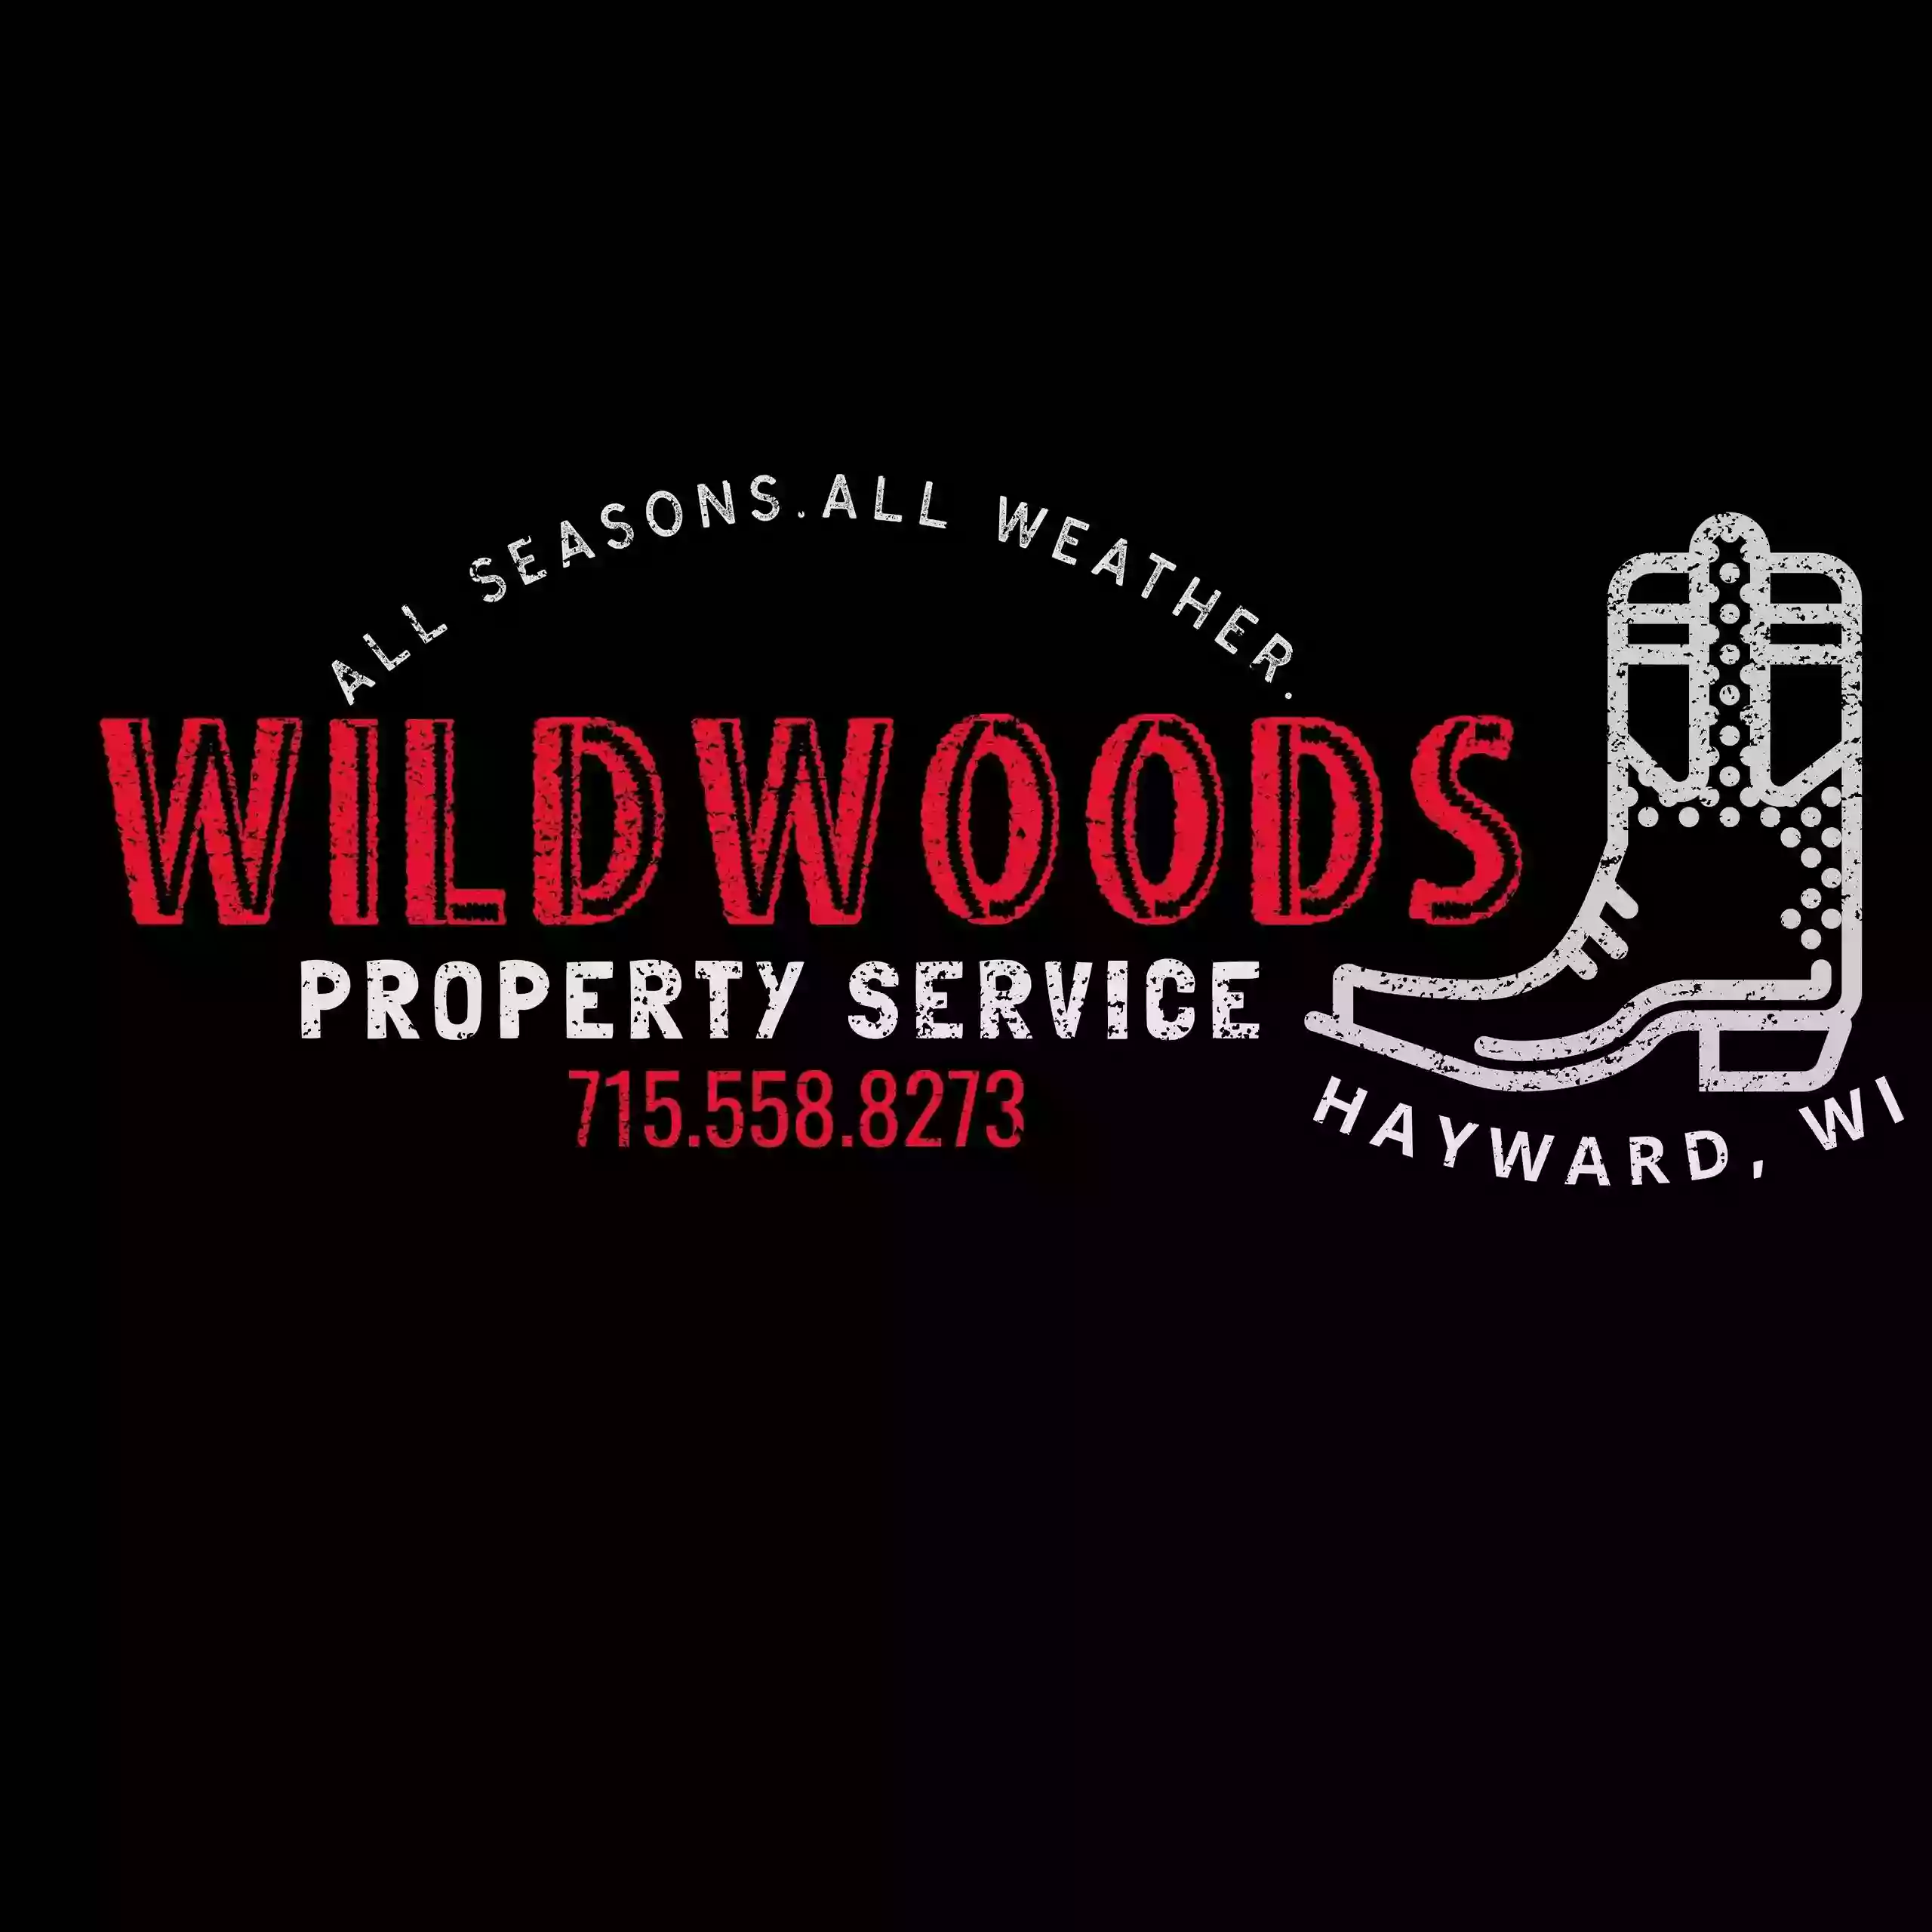 WildWoods Property Service